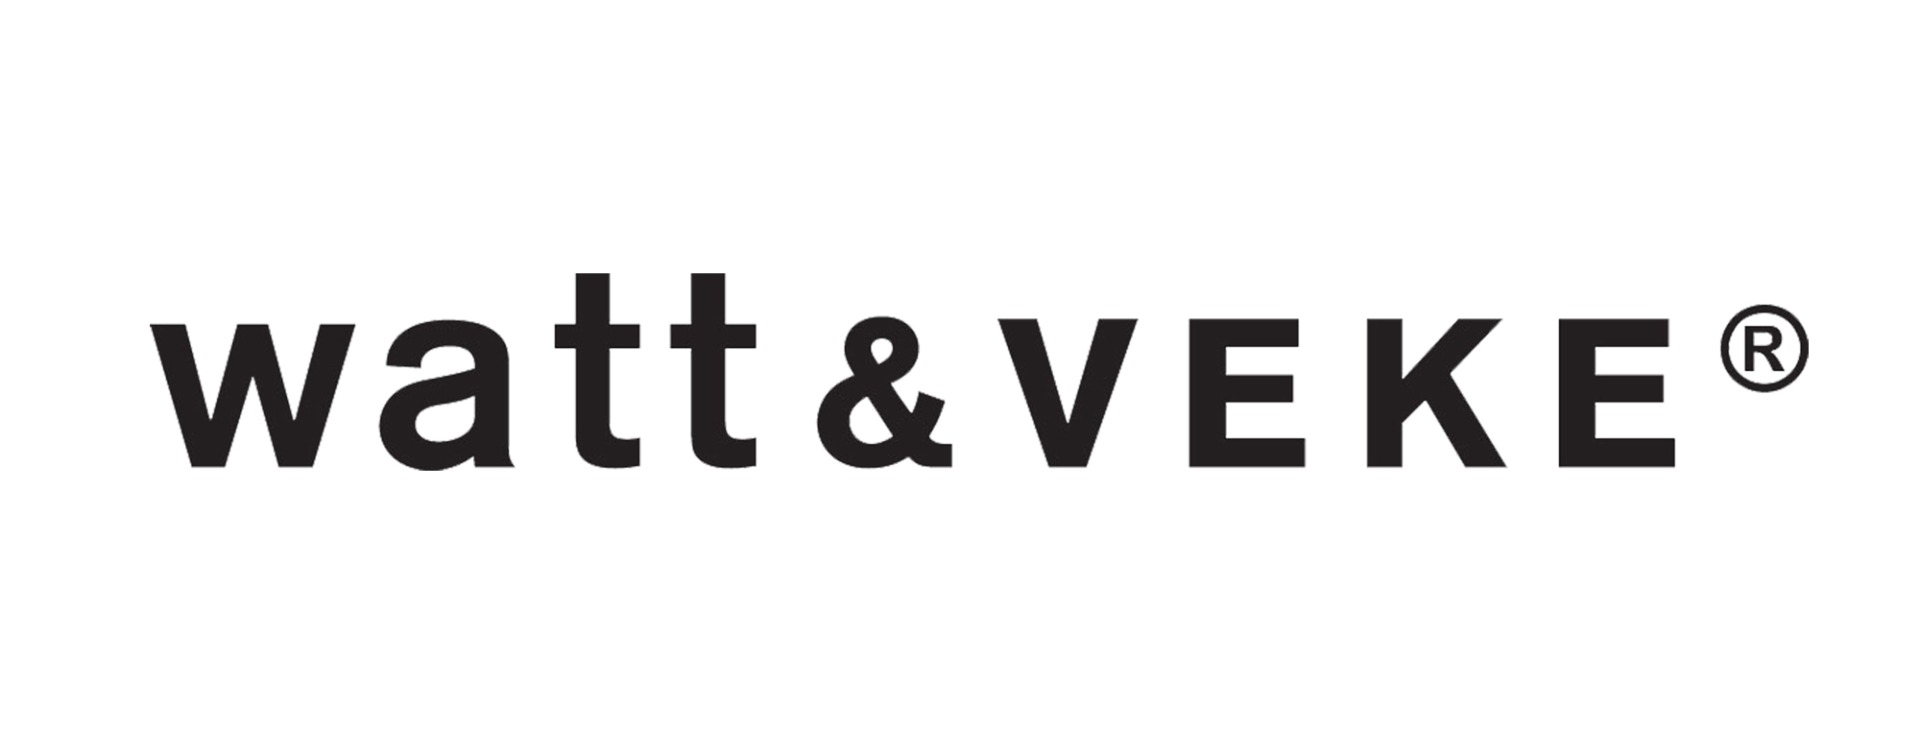 WattVeke_logo